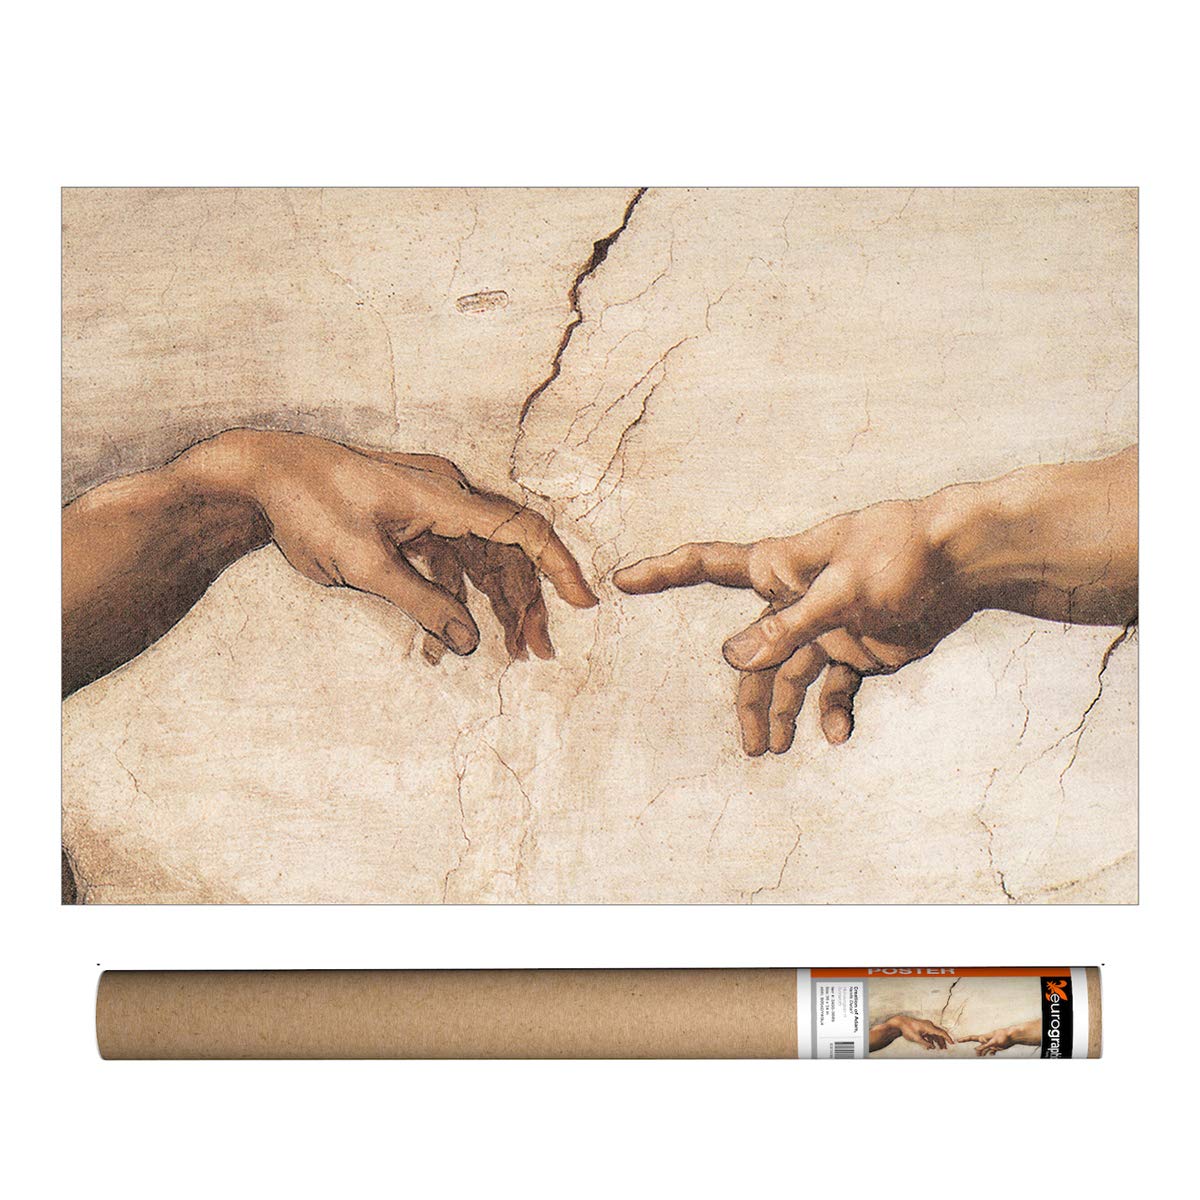 EuroGraphics Michelangelo - Creation-Detail Poster, Papier, 36 x 24 inch